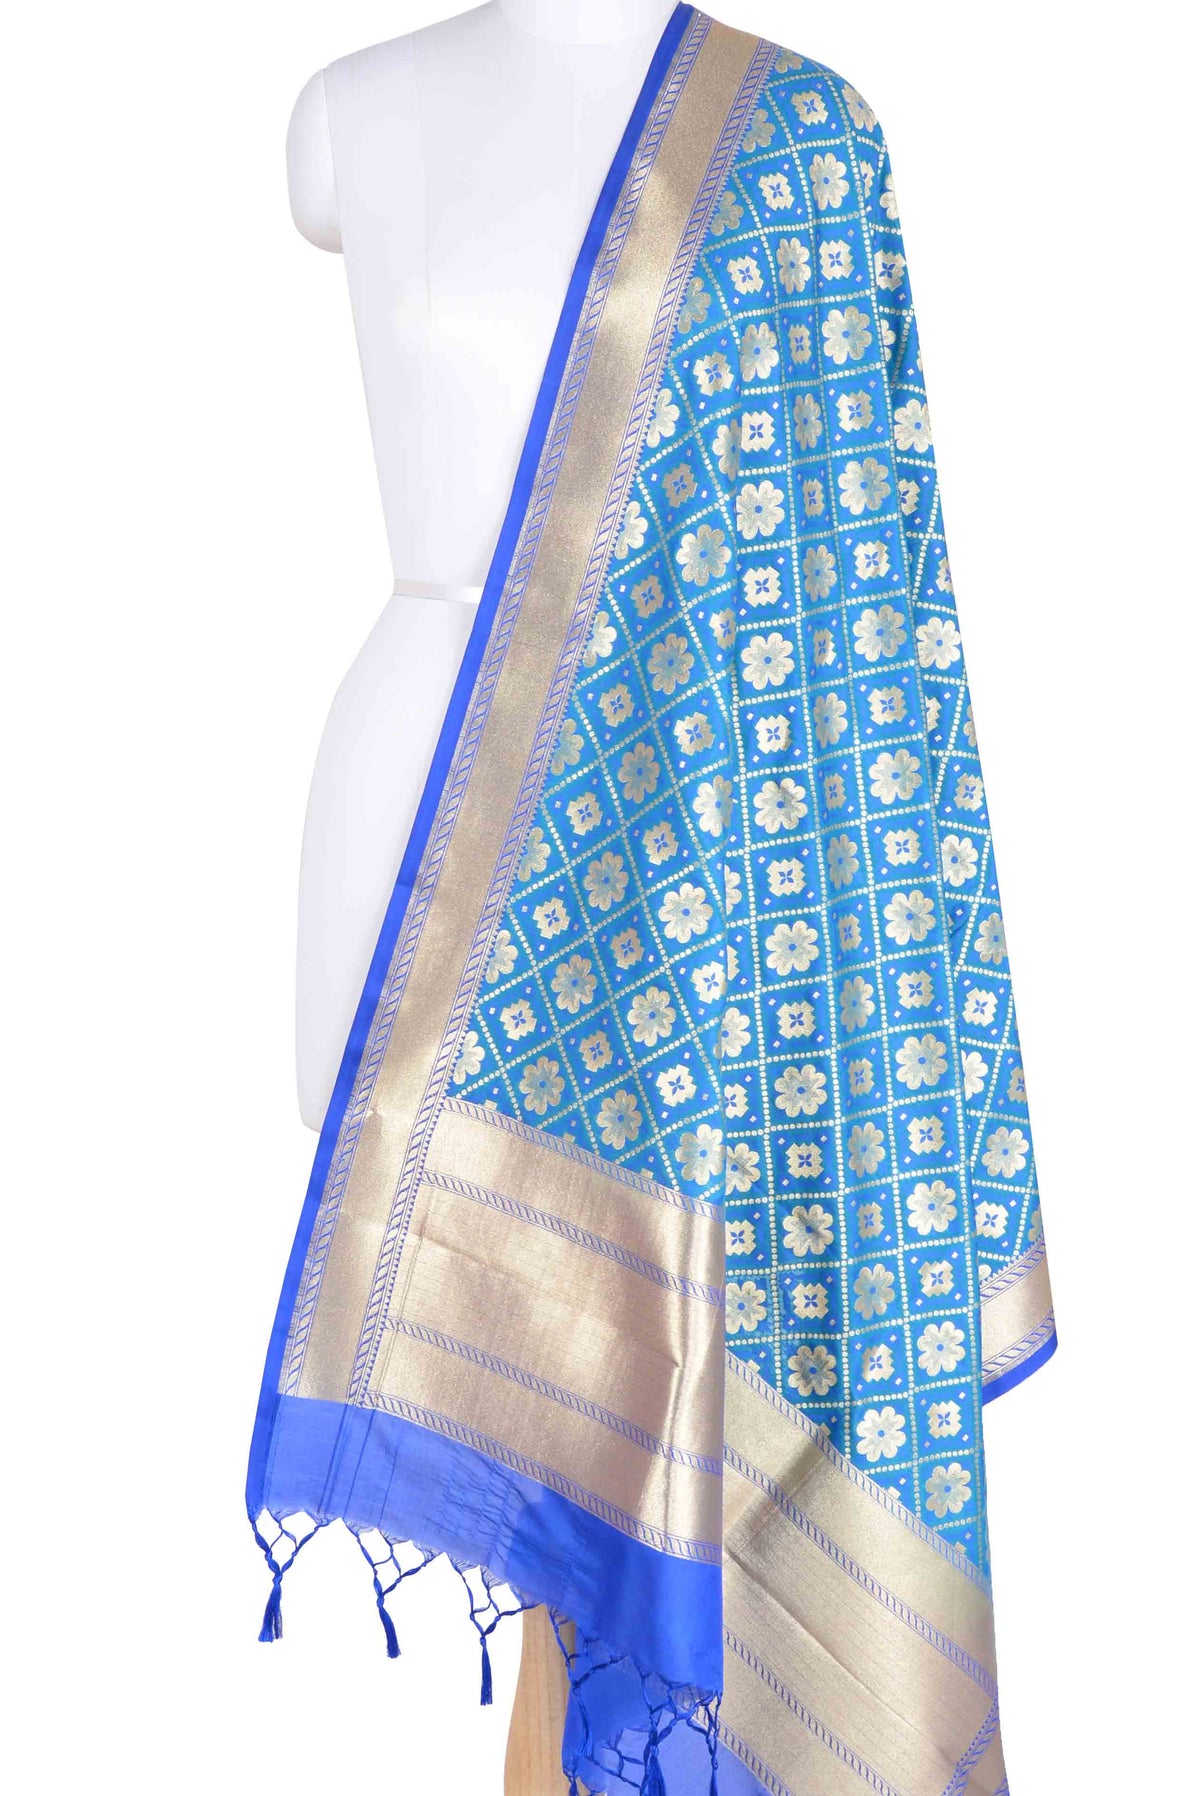 Sky Blue Banarasi dupatta with floral and plus motifs (1) Main